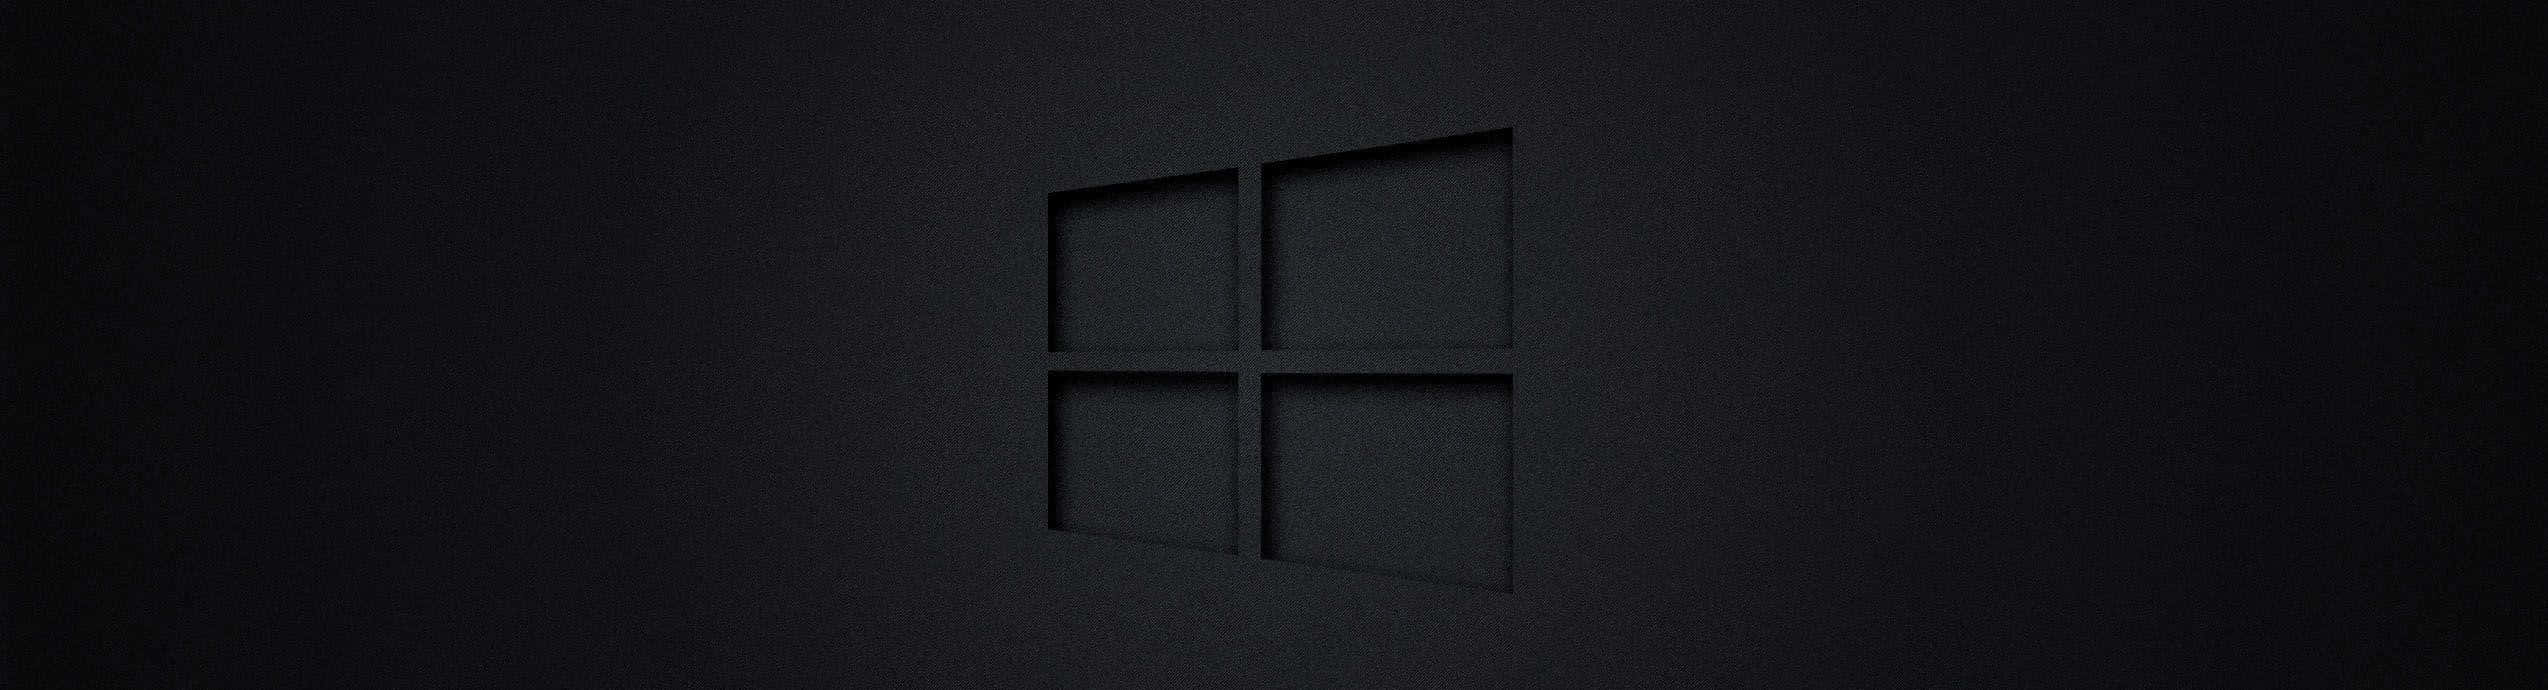 Dual Windows Wallpaper